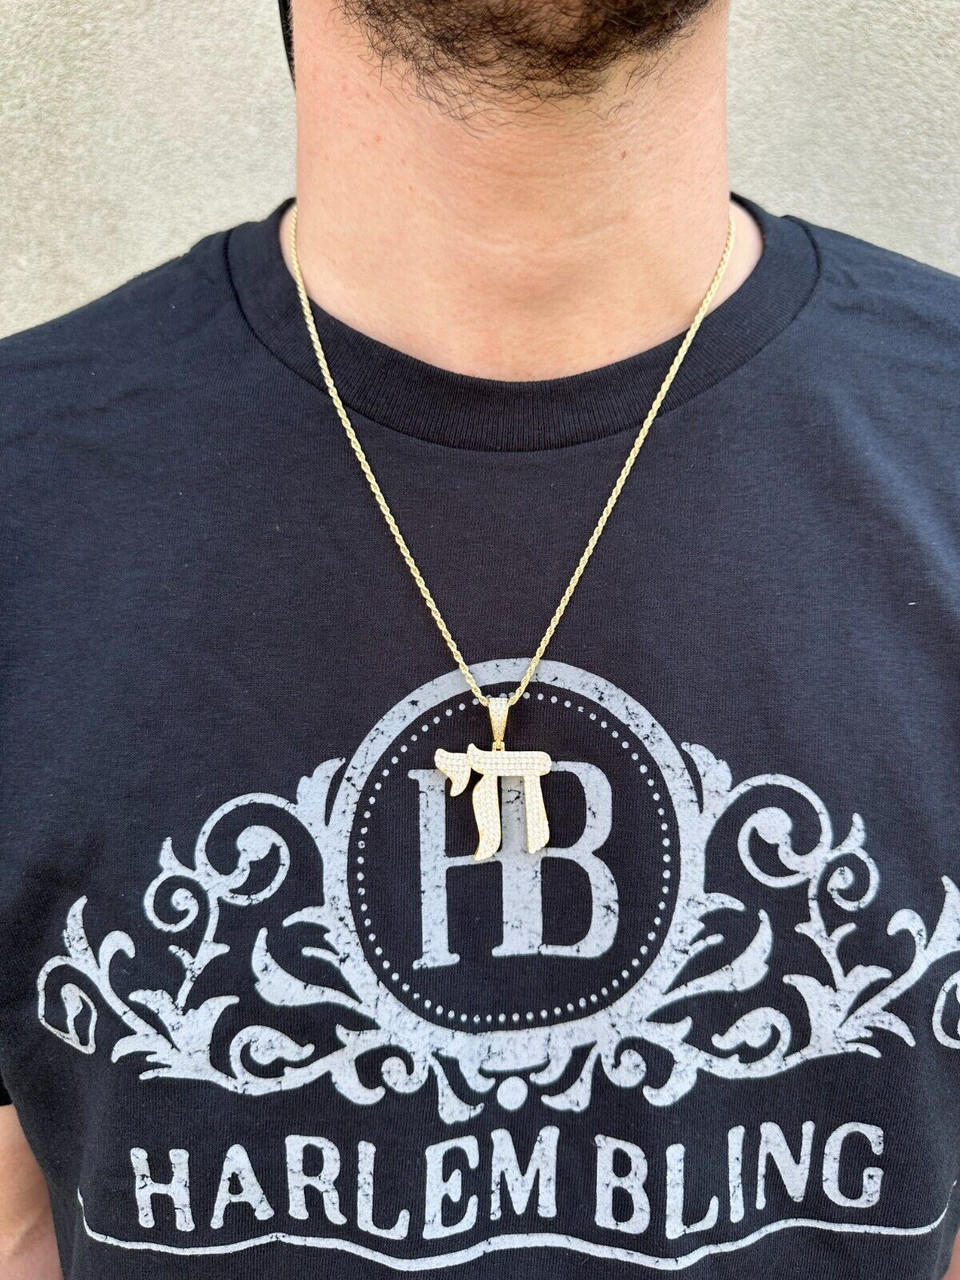 Isaac Mizrahi Rhinestone Chain Charmy Necklace